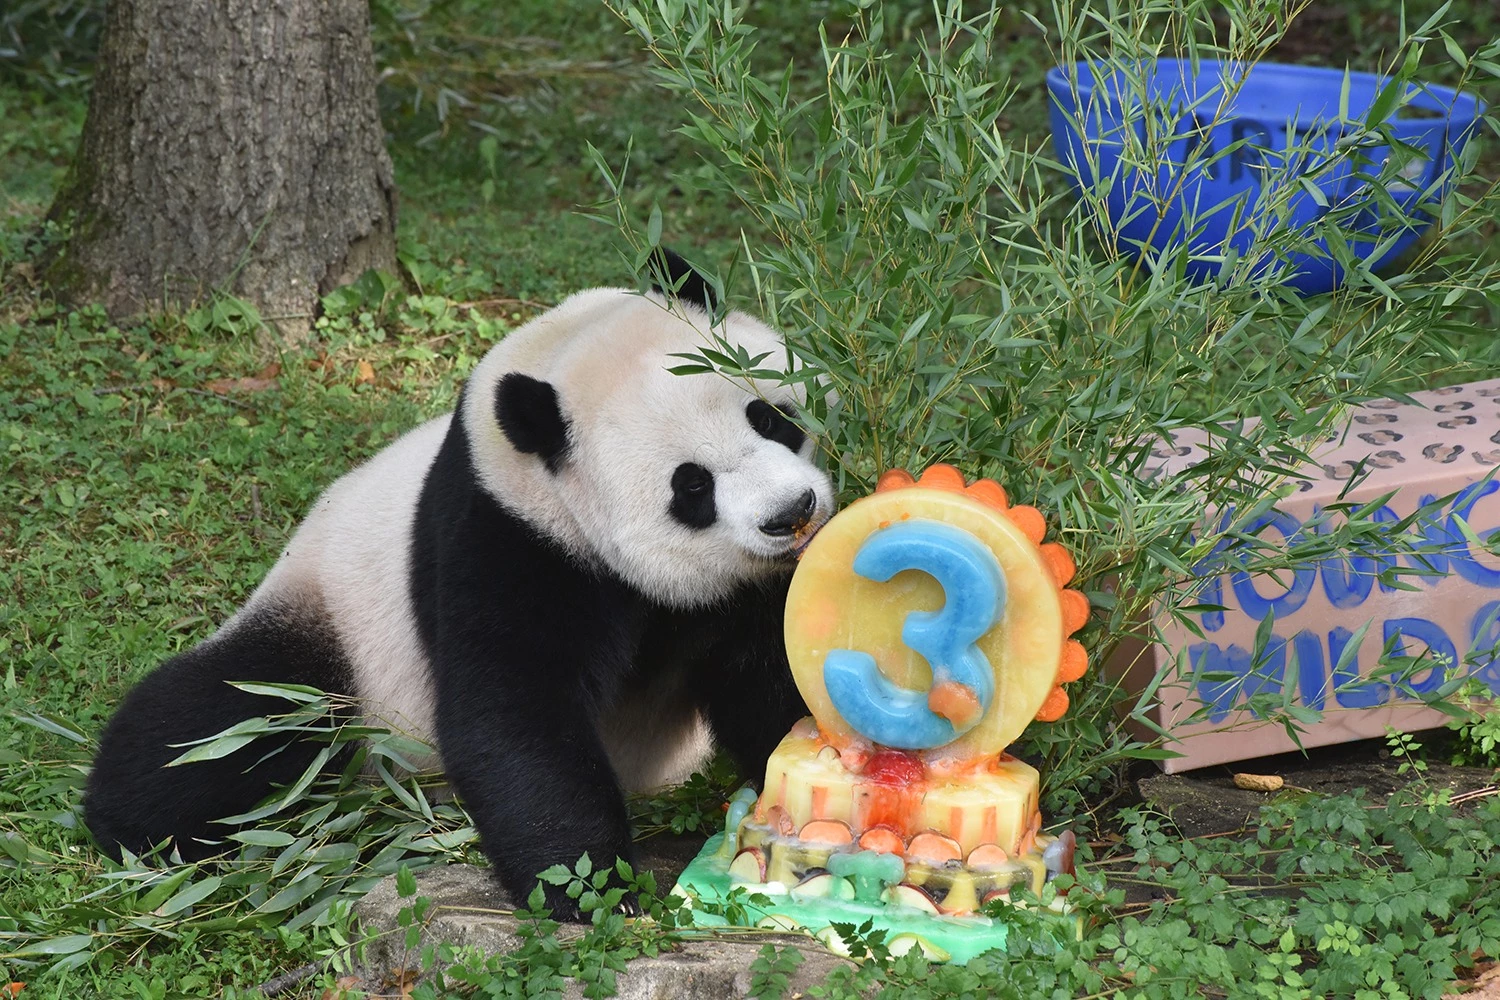 Giant panda Xiao Qi Ji enjoys an ice cake to celebrate his third birthday